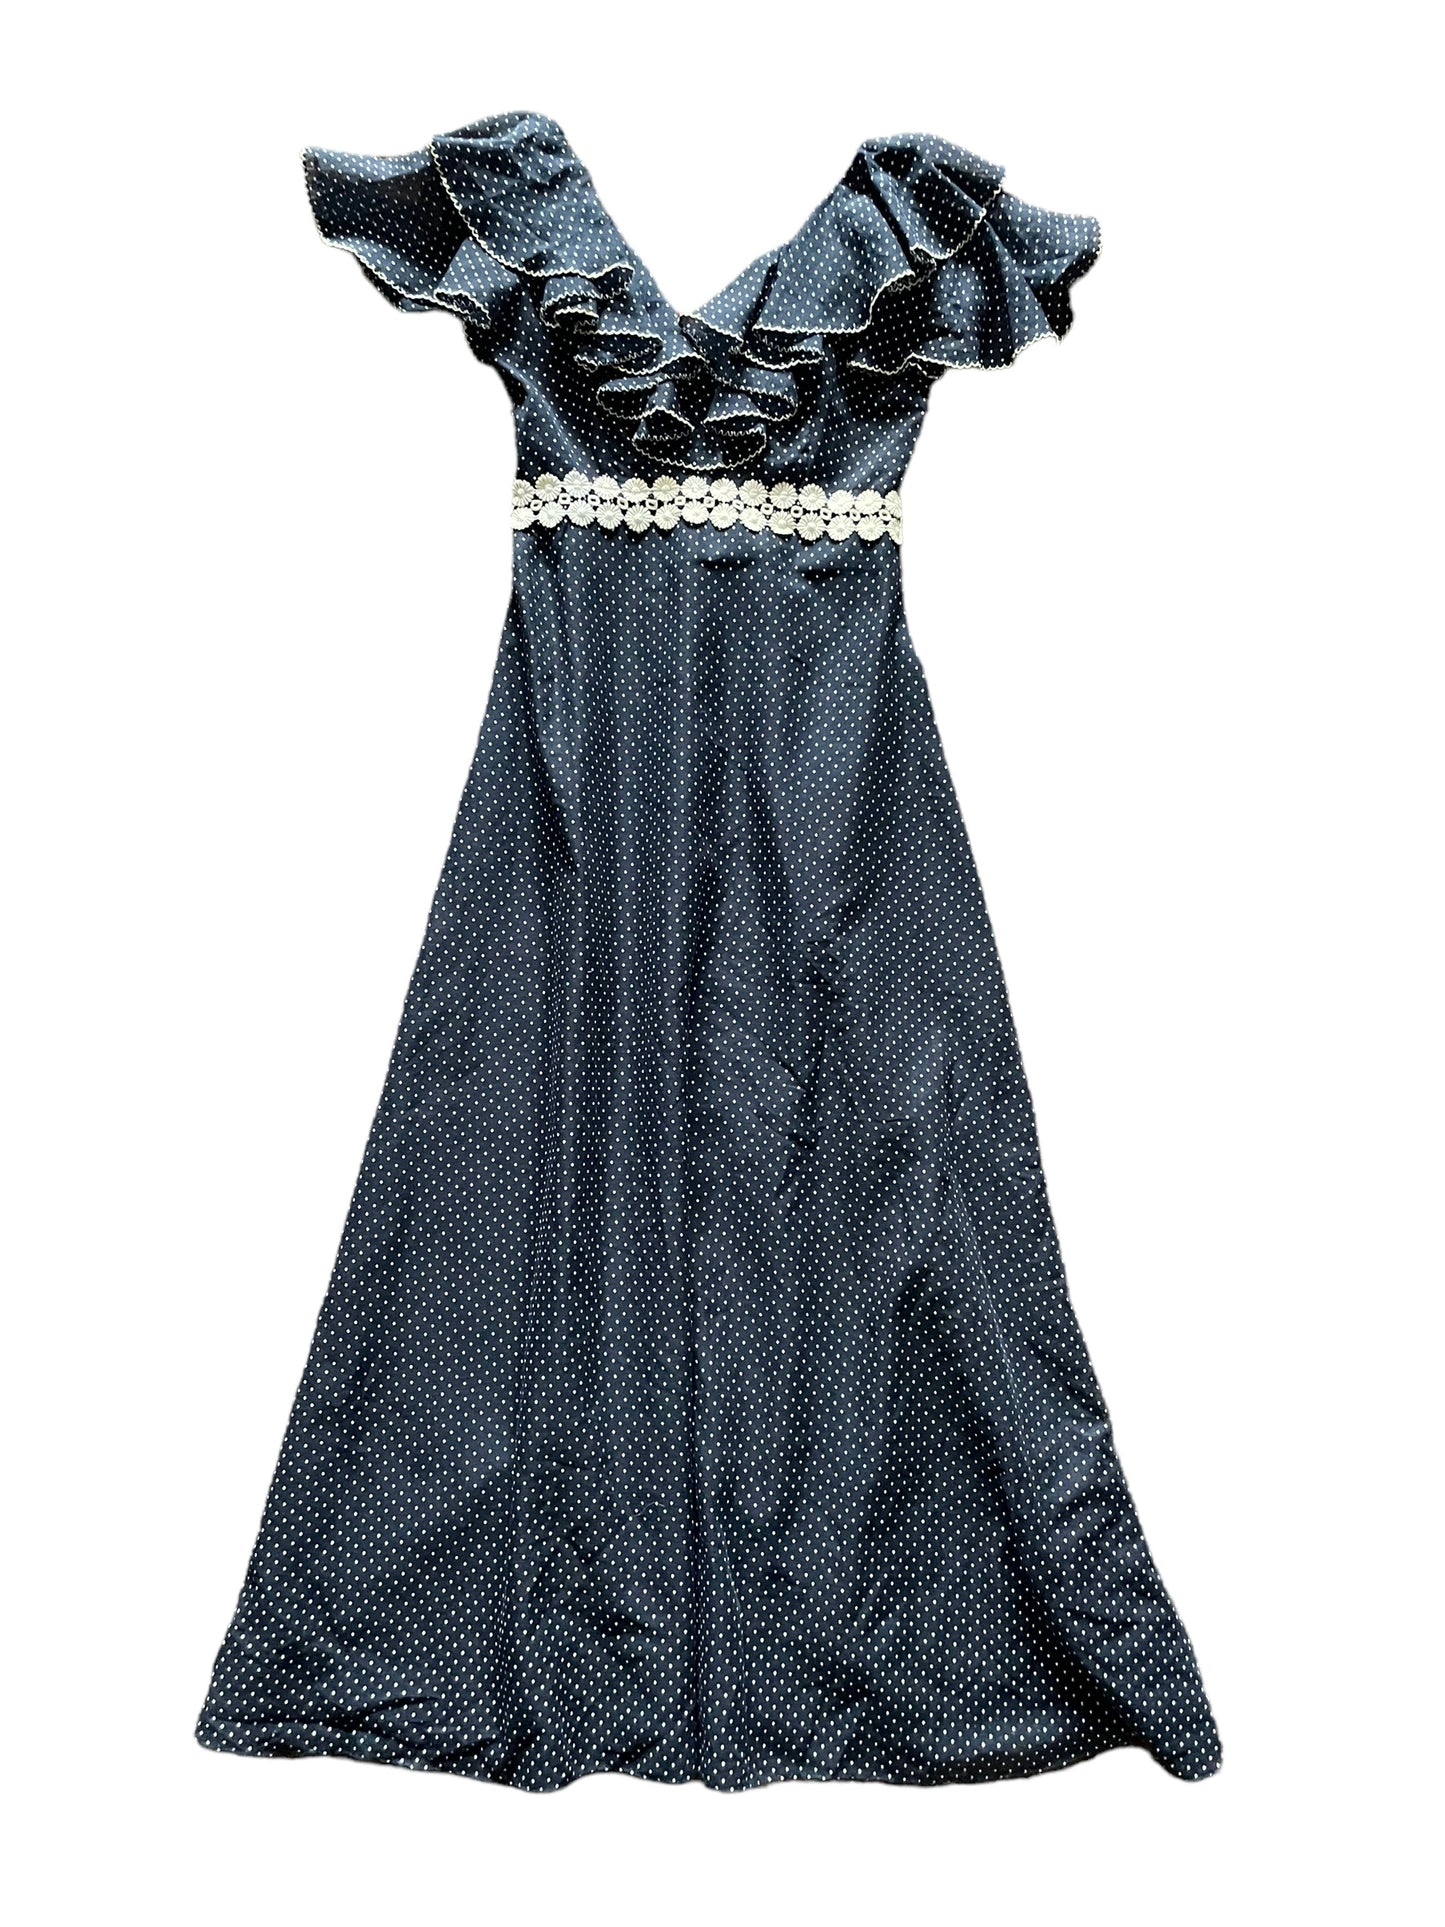 Full front view of Vintage 1970s Navy Blue Swiss Dot Maxi Dress SZ S |  Barn Owl Vintage Dresses | Seattle True Vintage